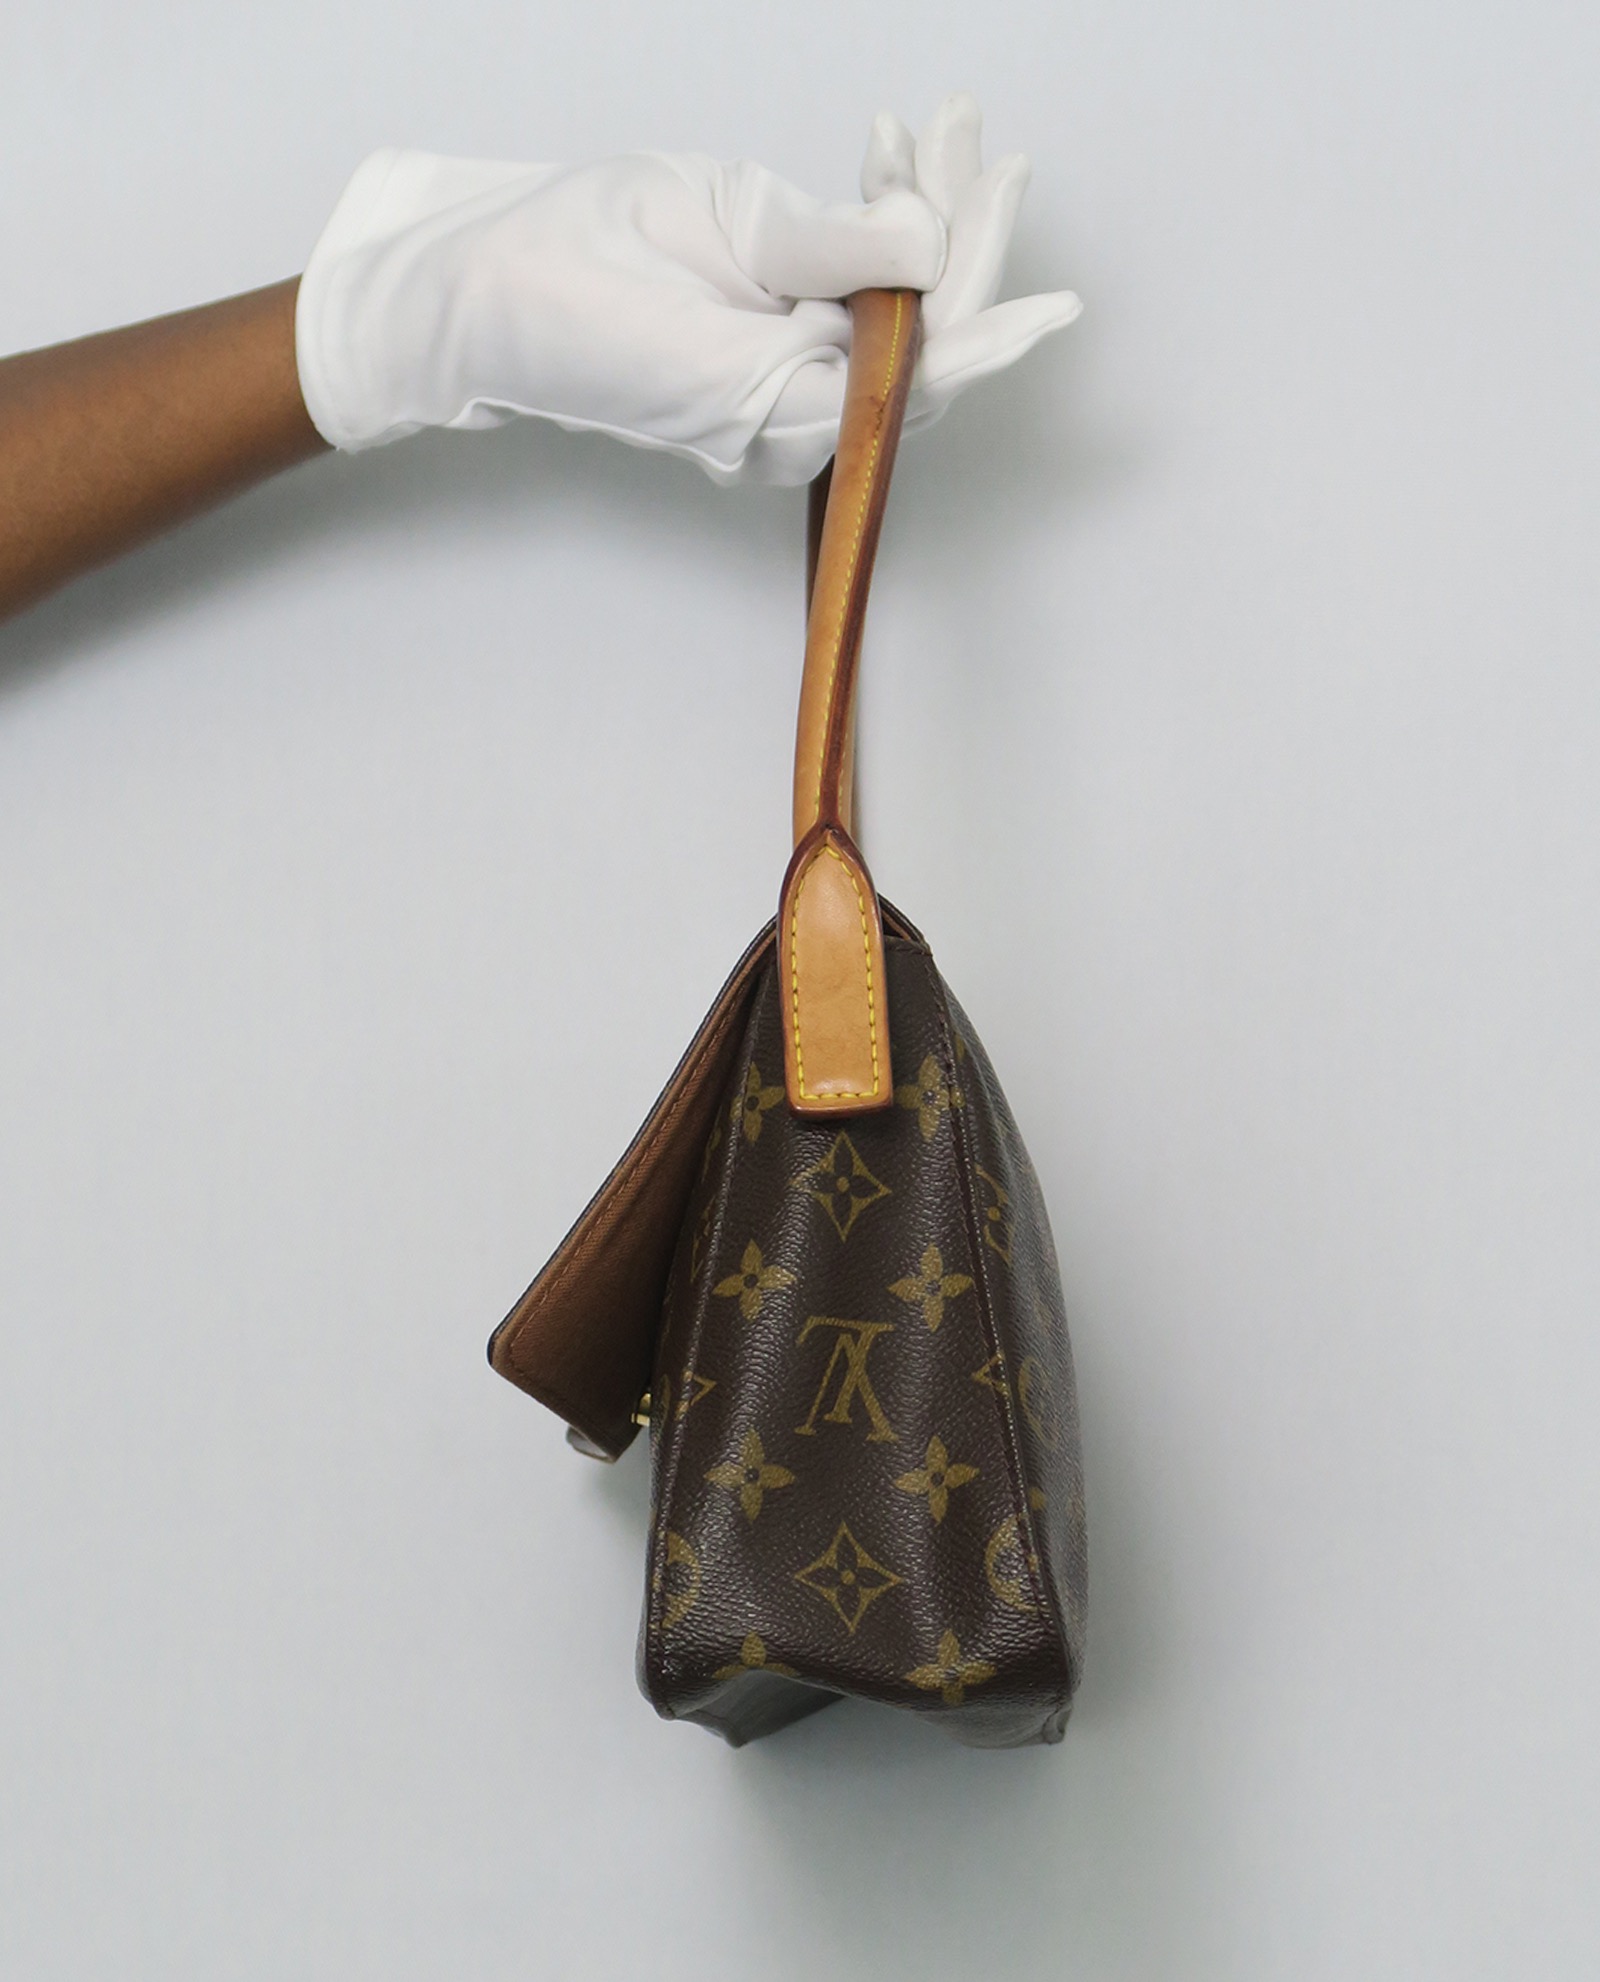 Louis Vuitton Monogram Canvas Looping PM Bag Louis Vuitton